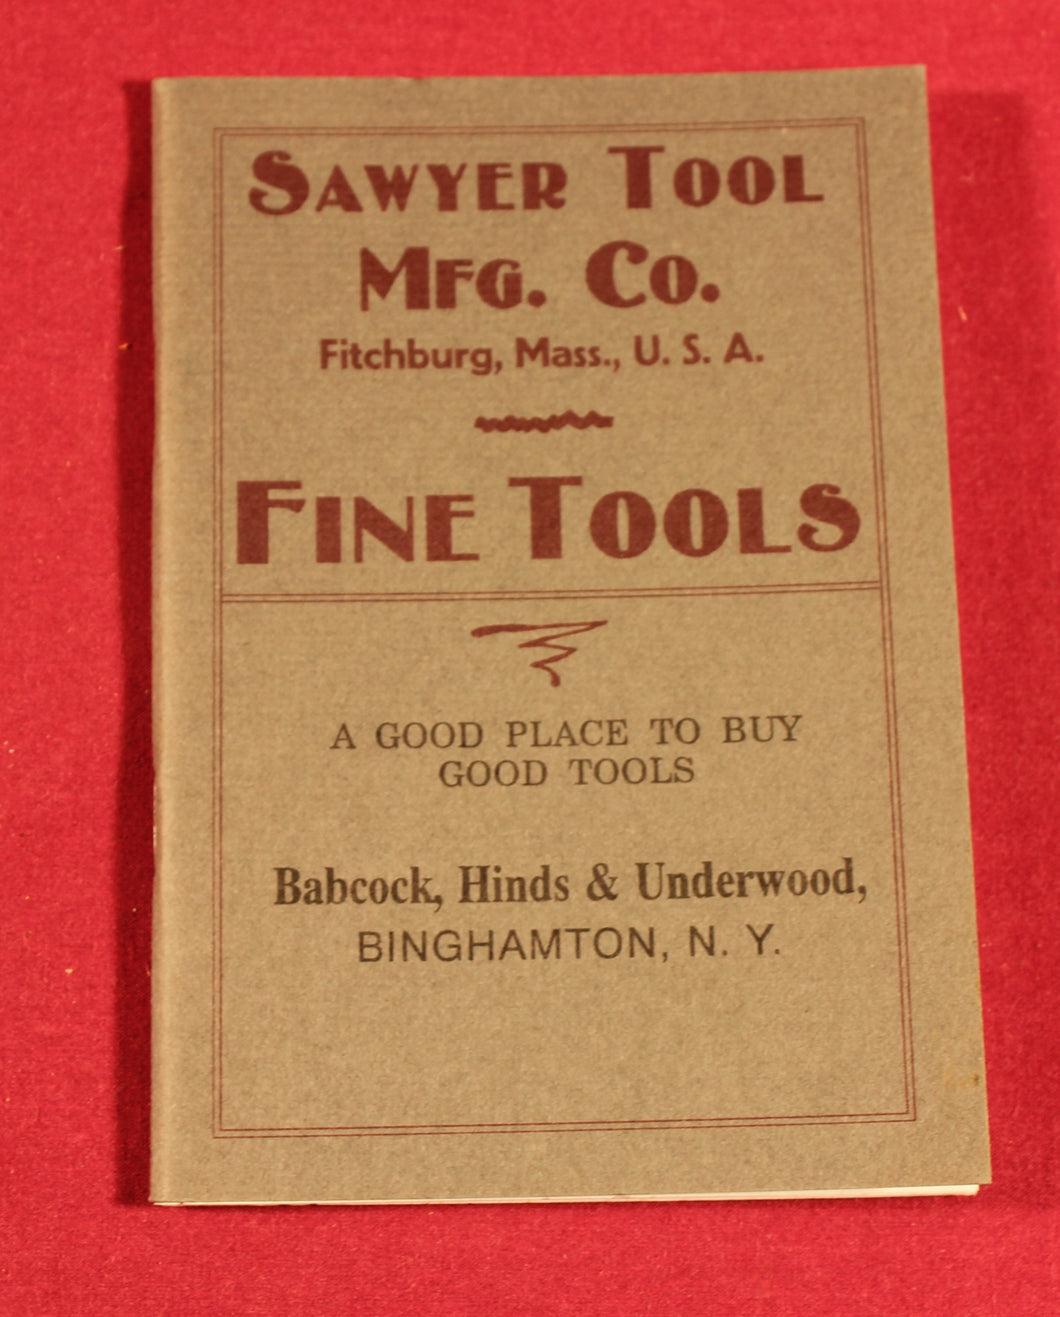 Fine Reprint of 1904 Sawyer Tool Mfg. Co. Fine Tools Catalog